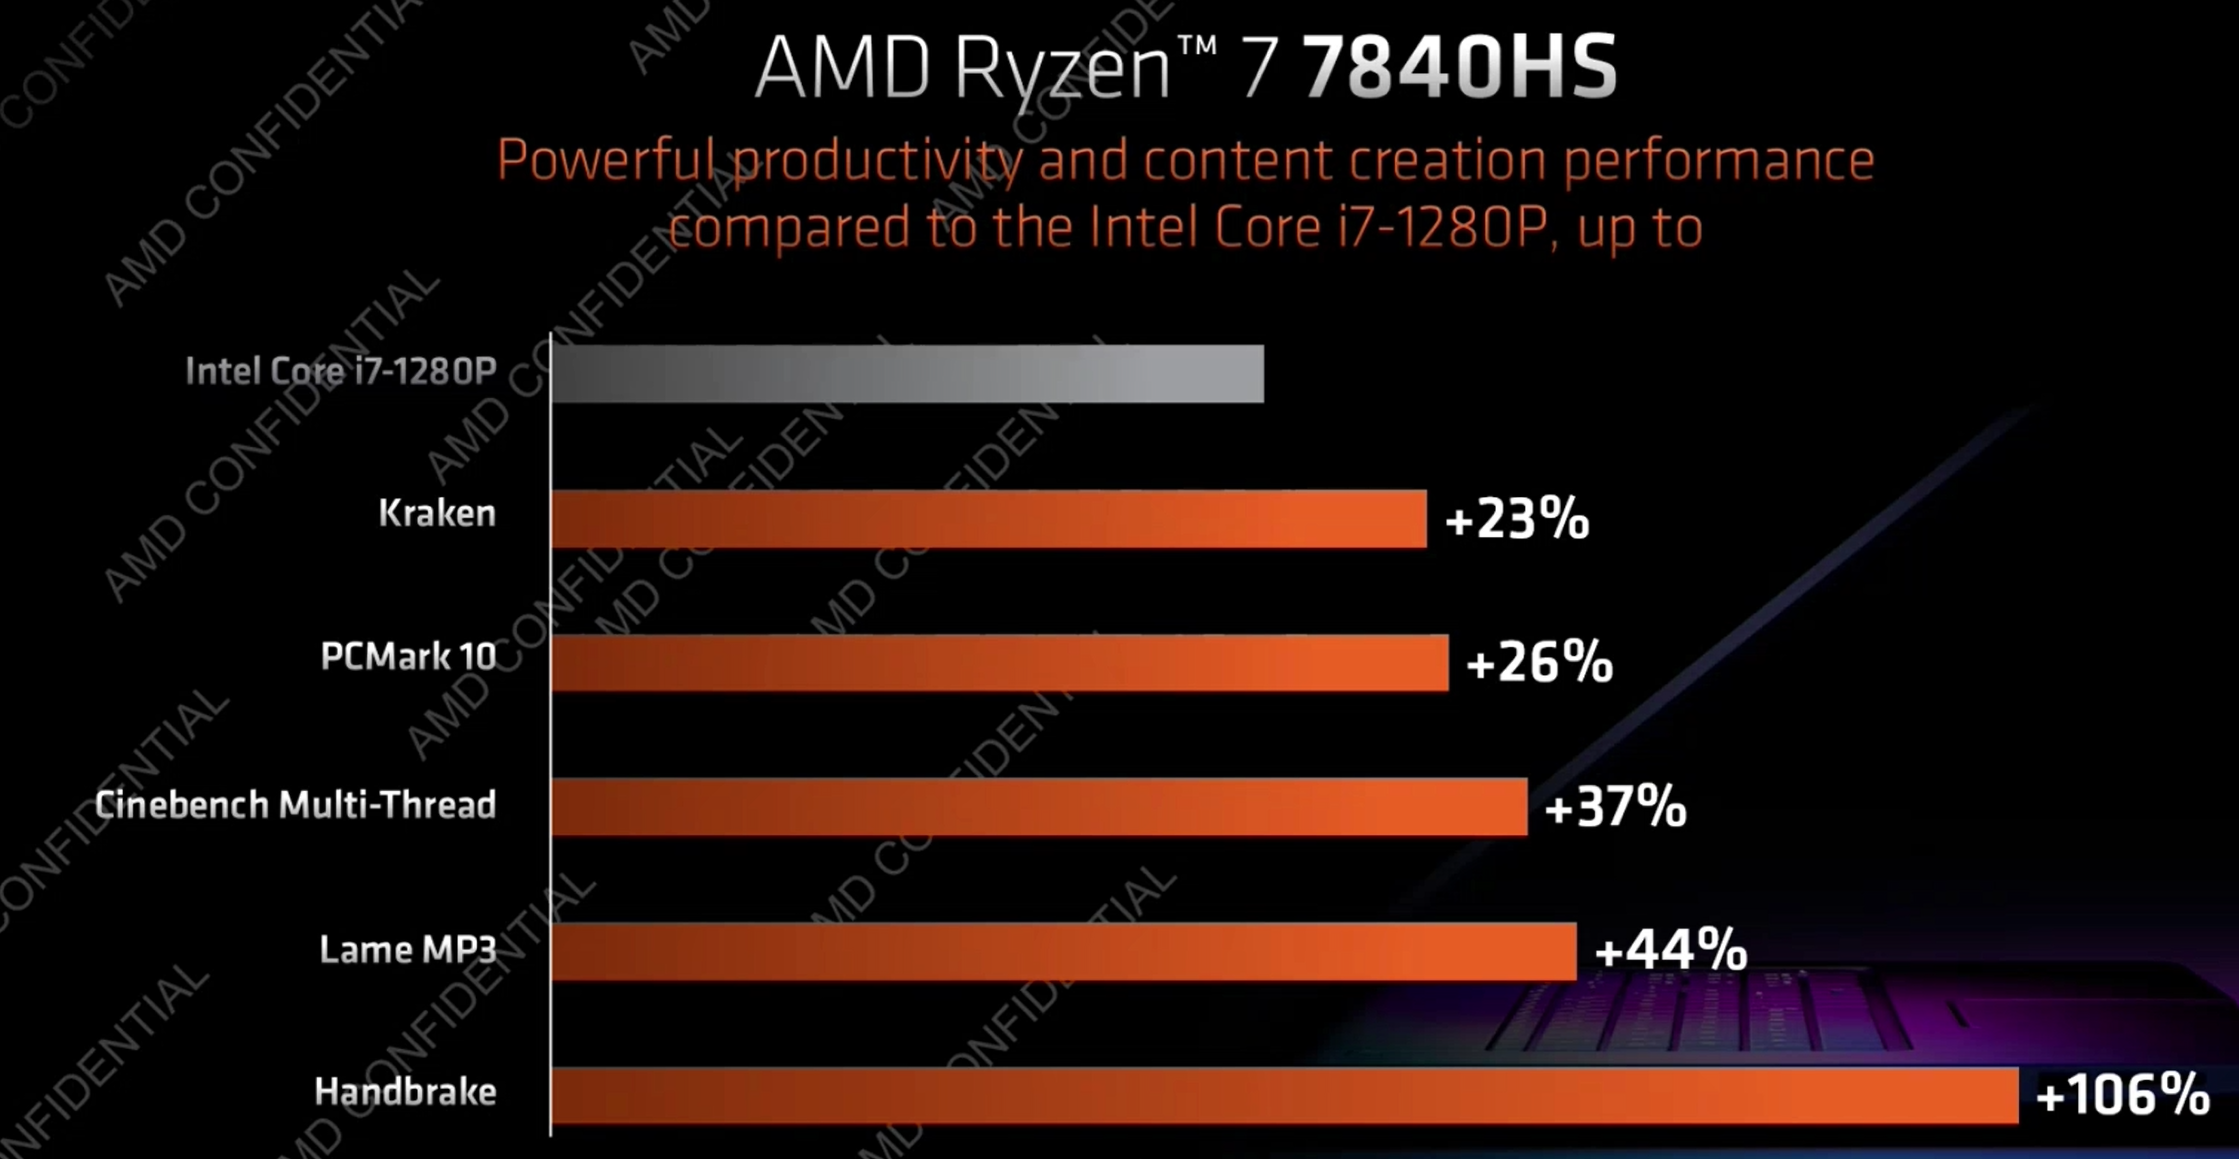 AMD Ryzen 7 7840HS mobile productivity